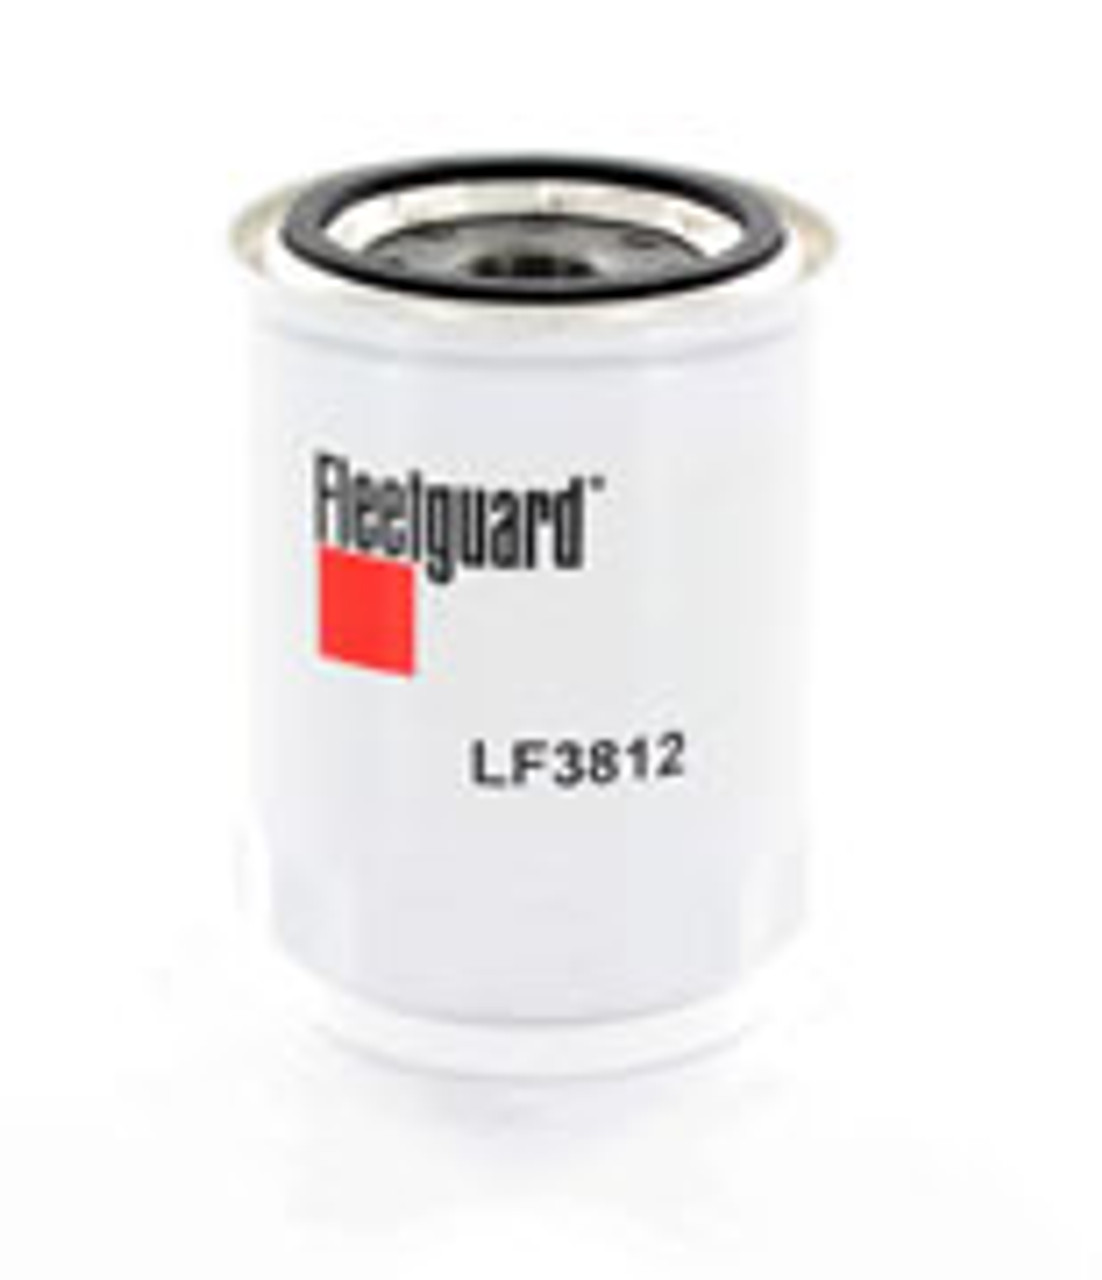 LF3812: Fleetguard Oil Filter